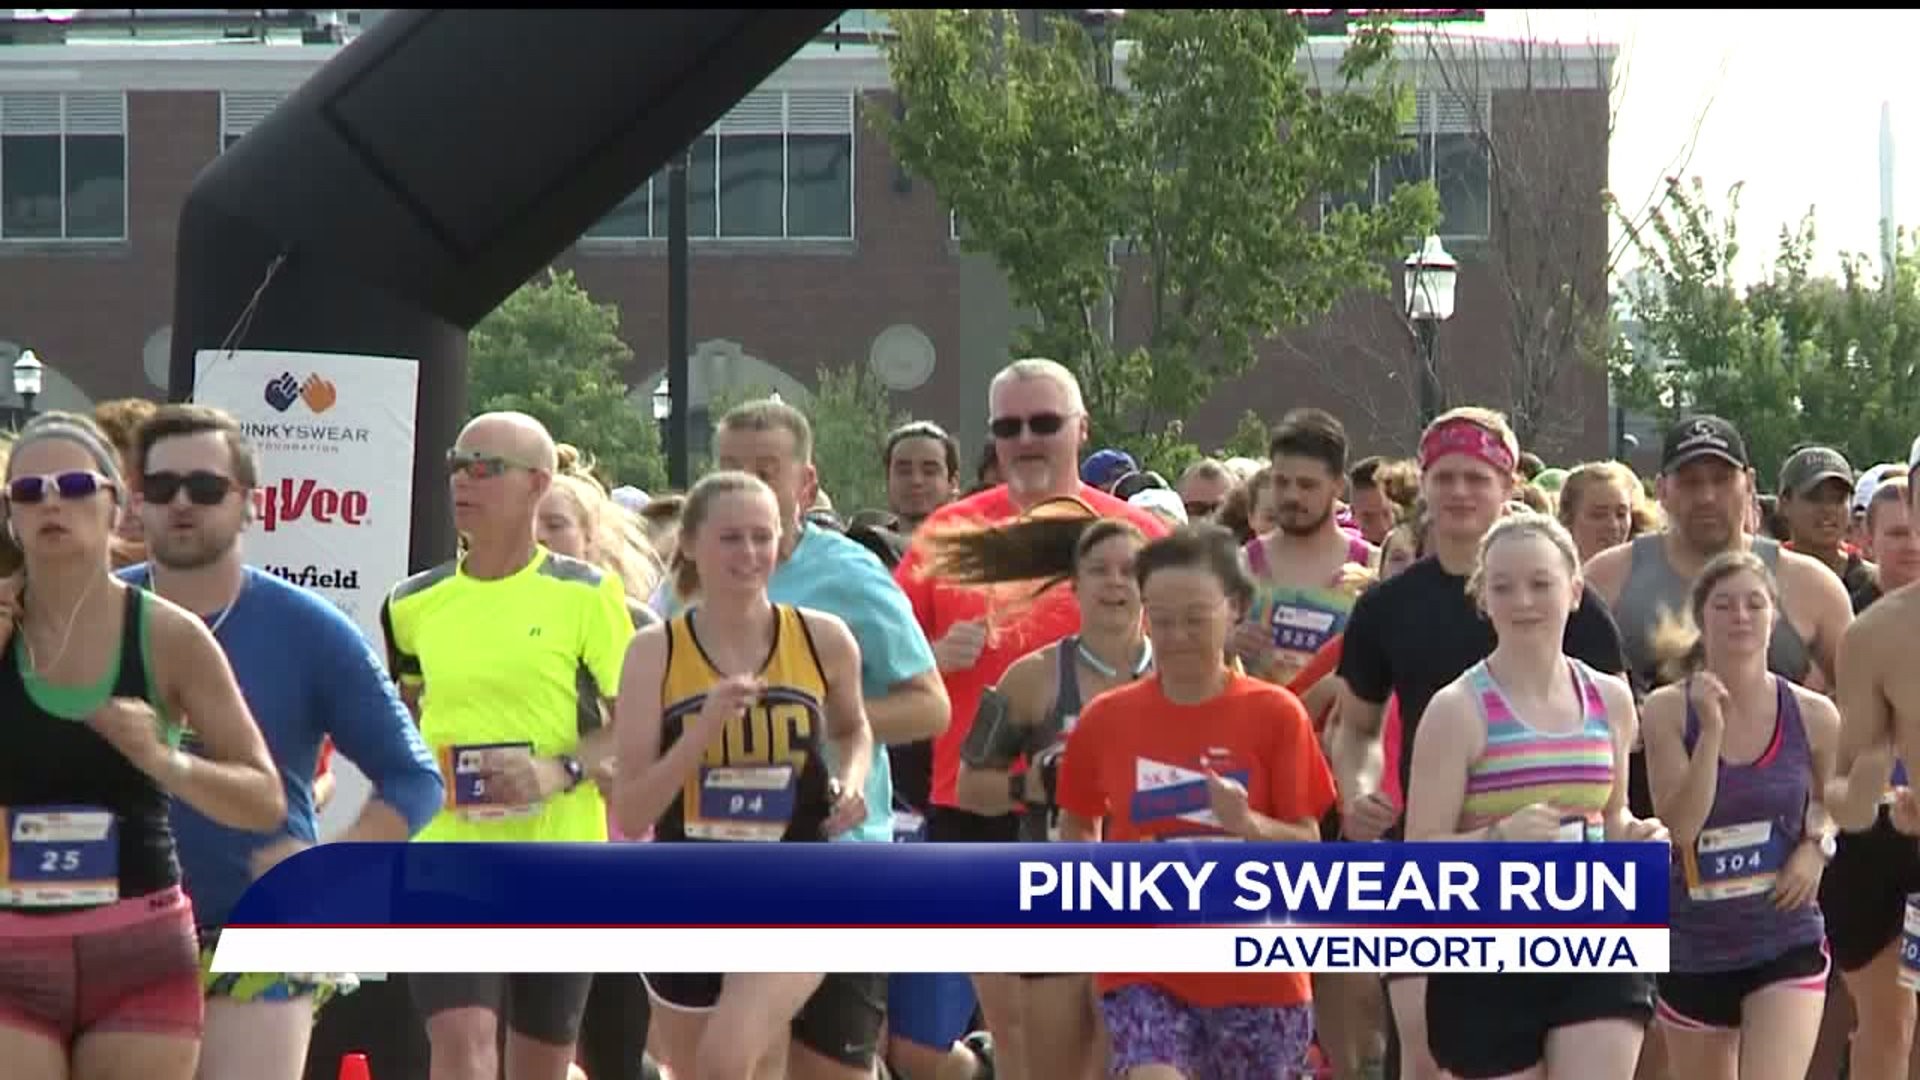 Pinky Swear Run raises money for families battling cancer